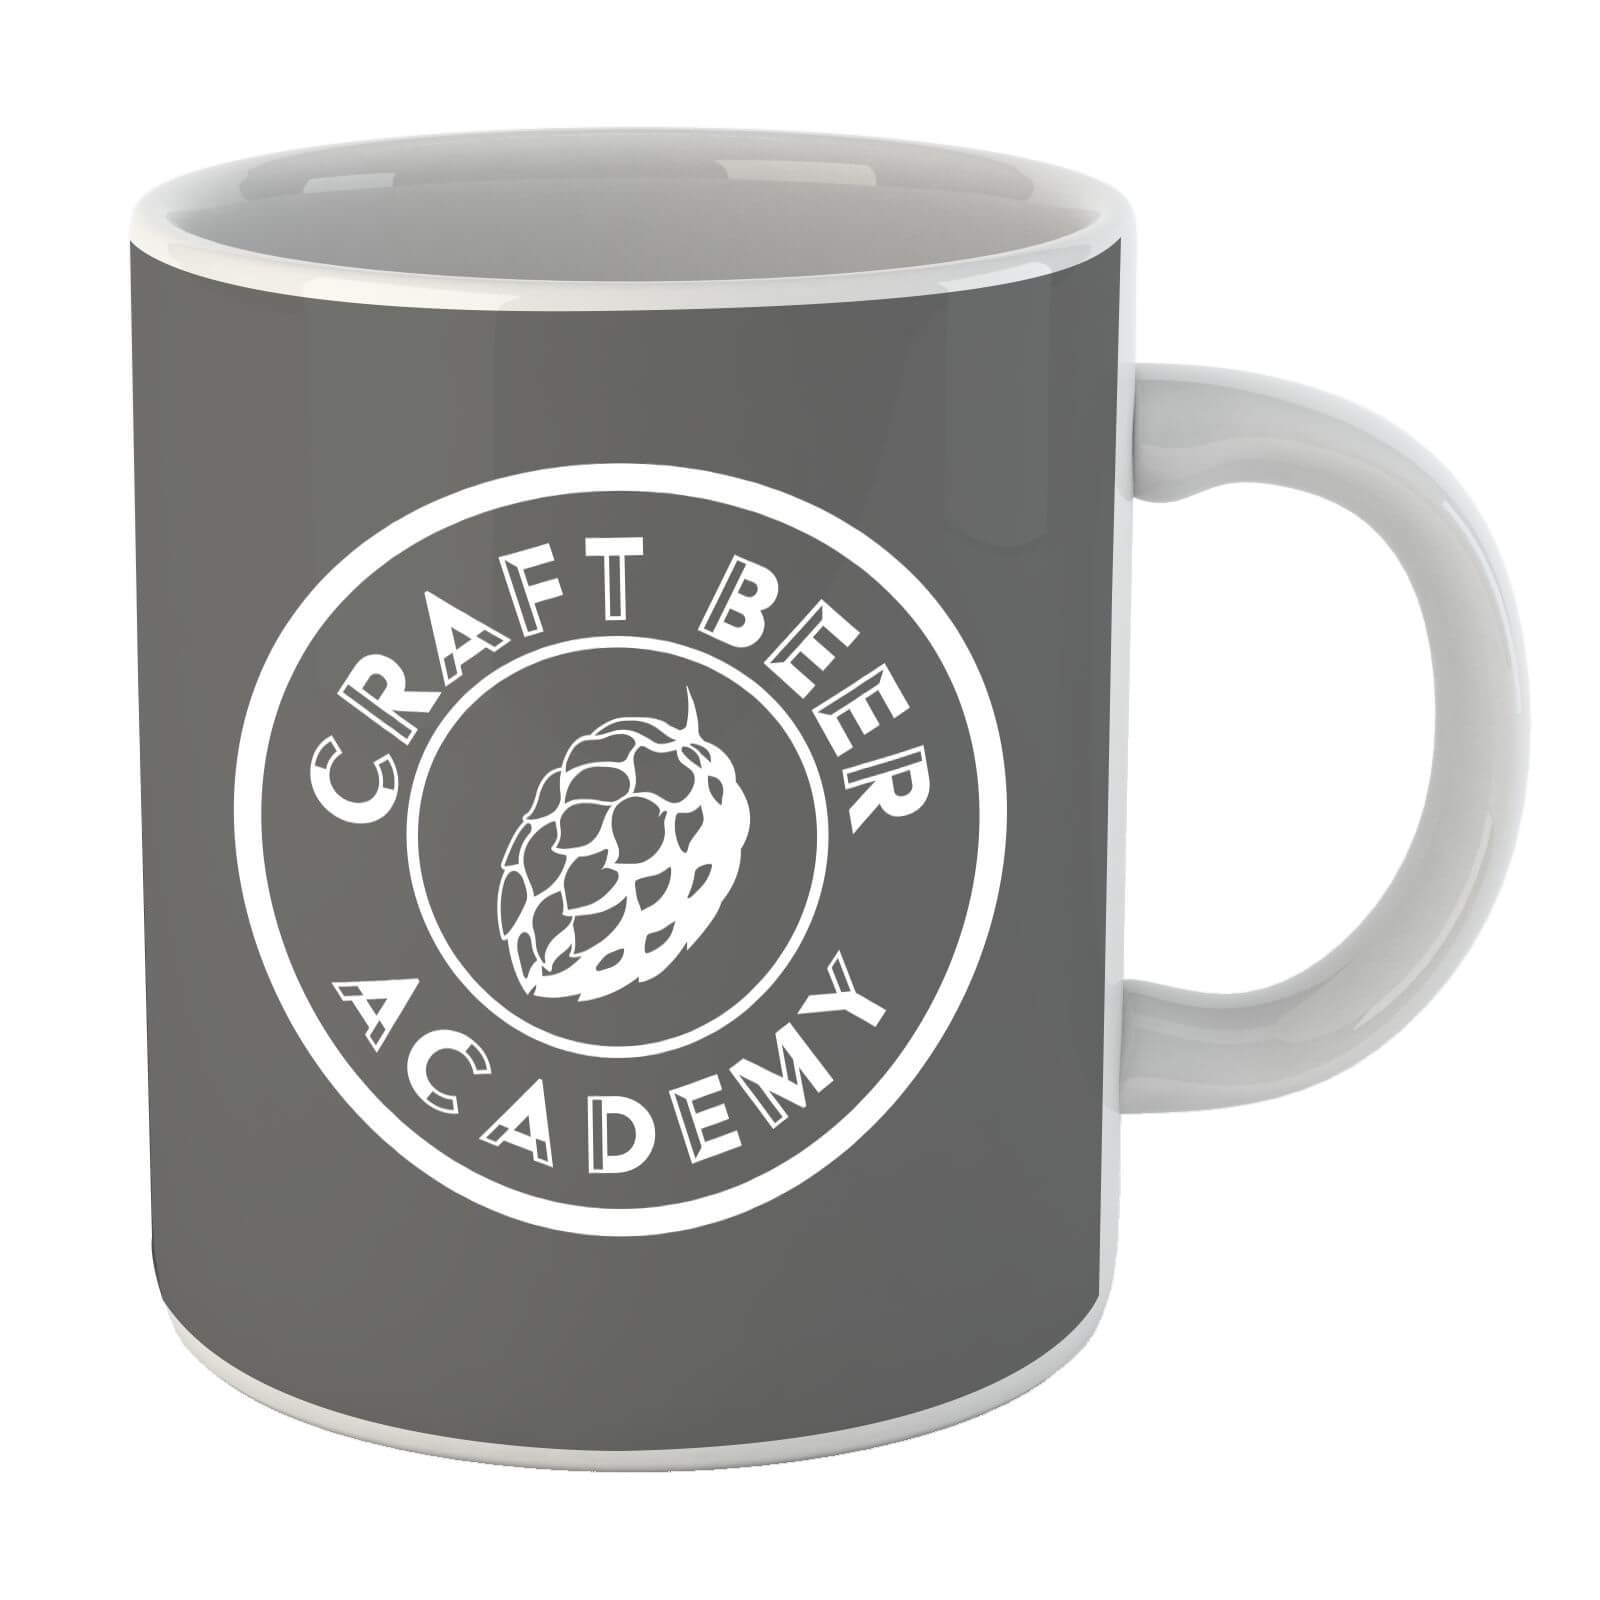 Craft Beer Academy Mug